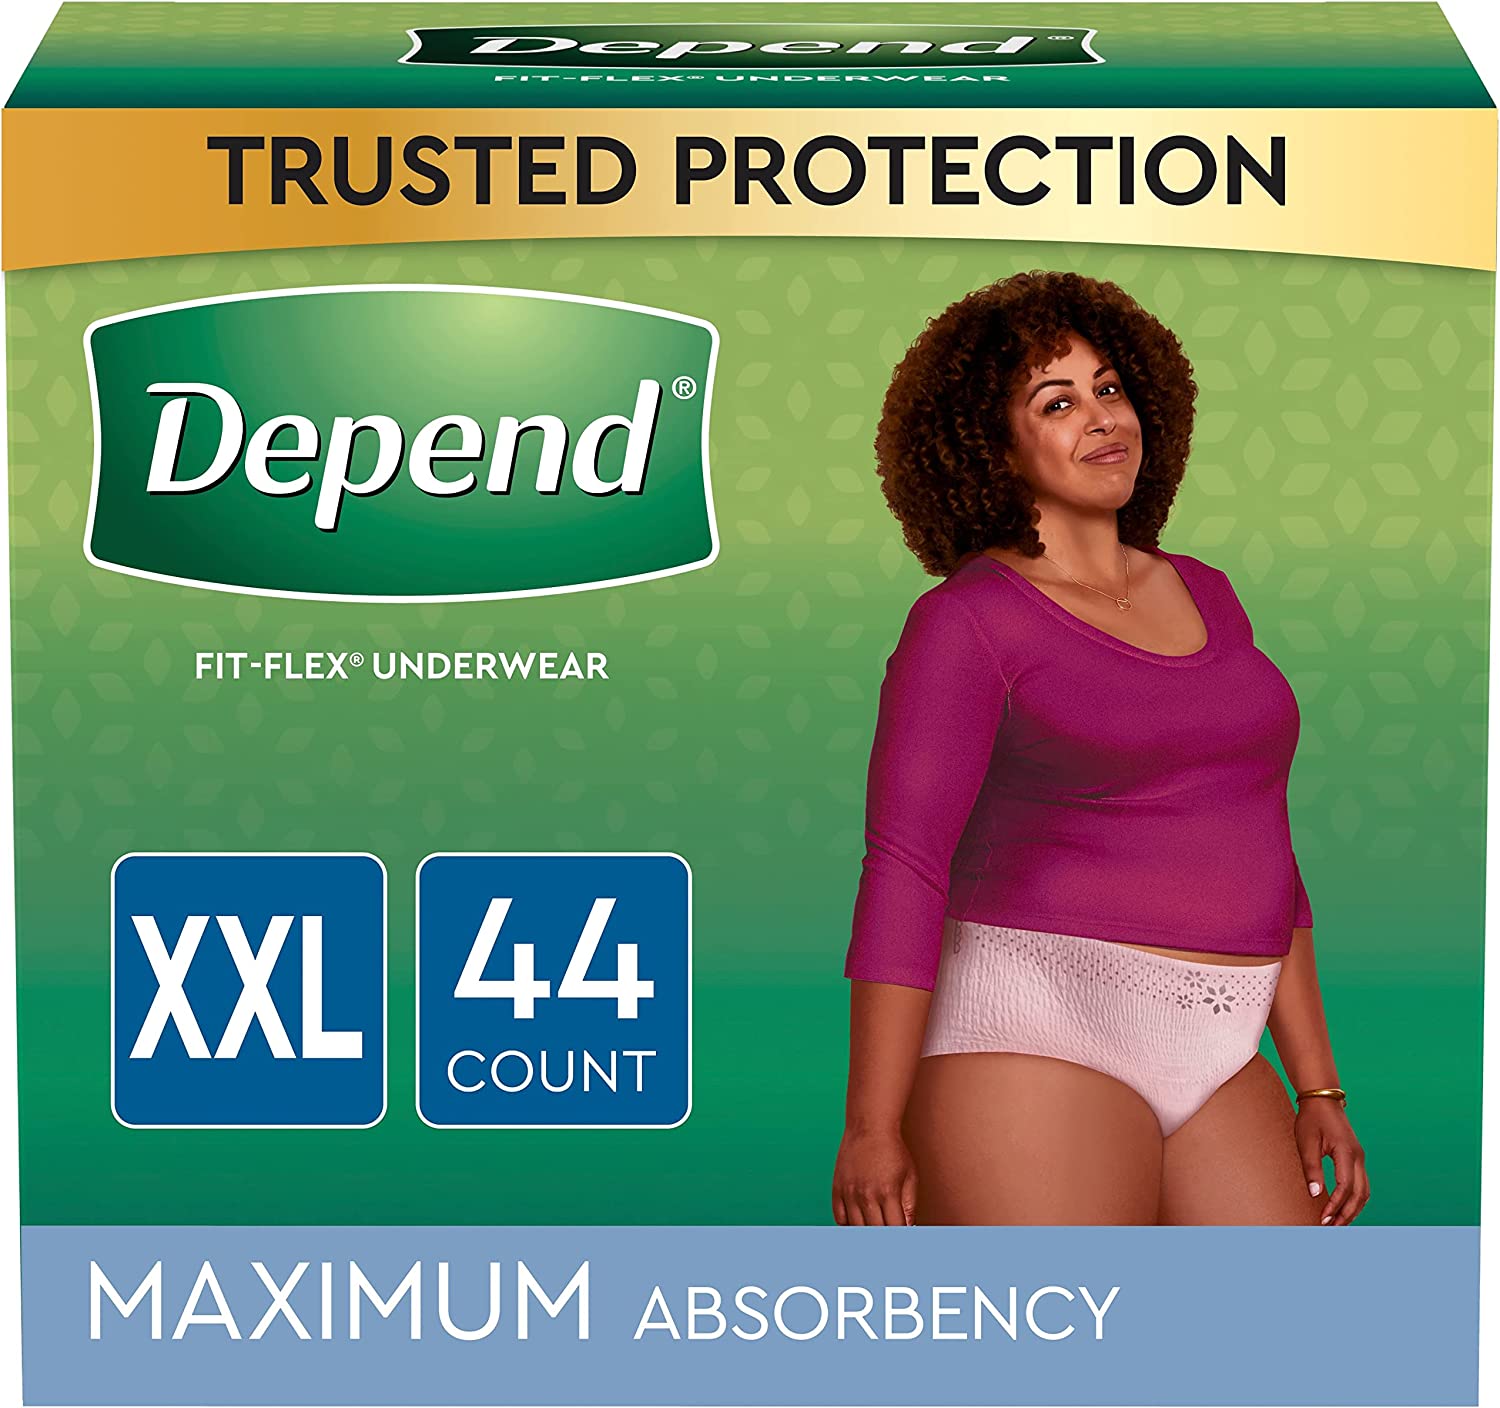 Depend Fit-Flex Pull On Female Underwear at